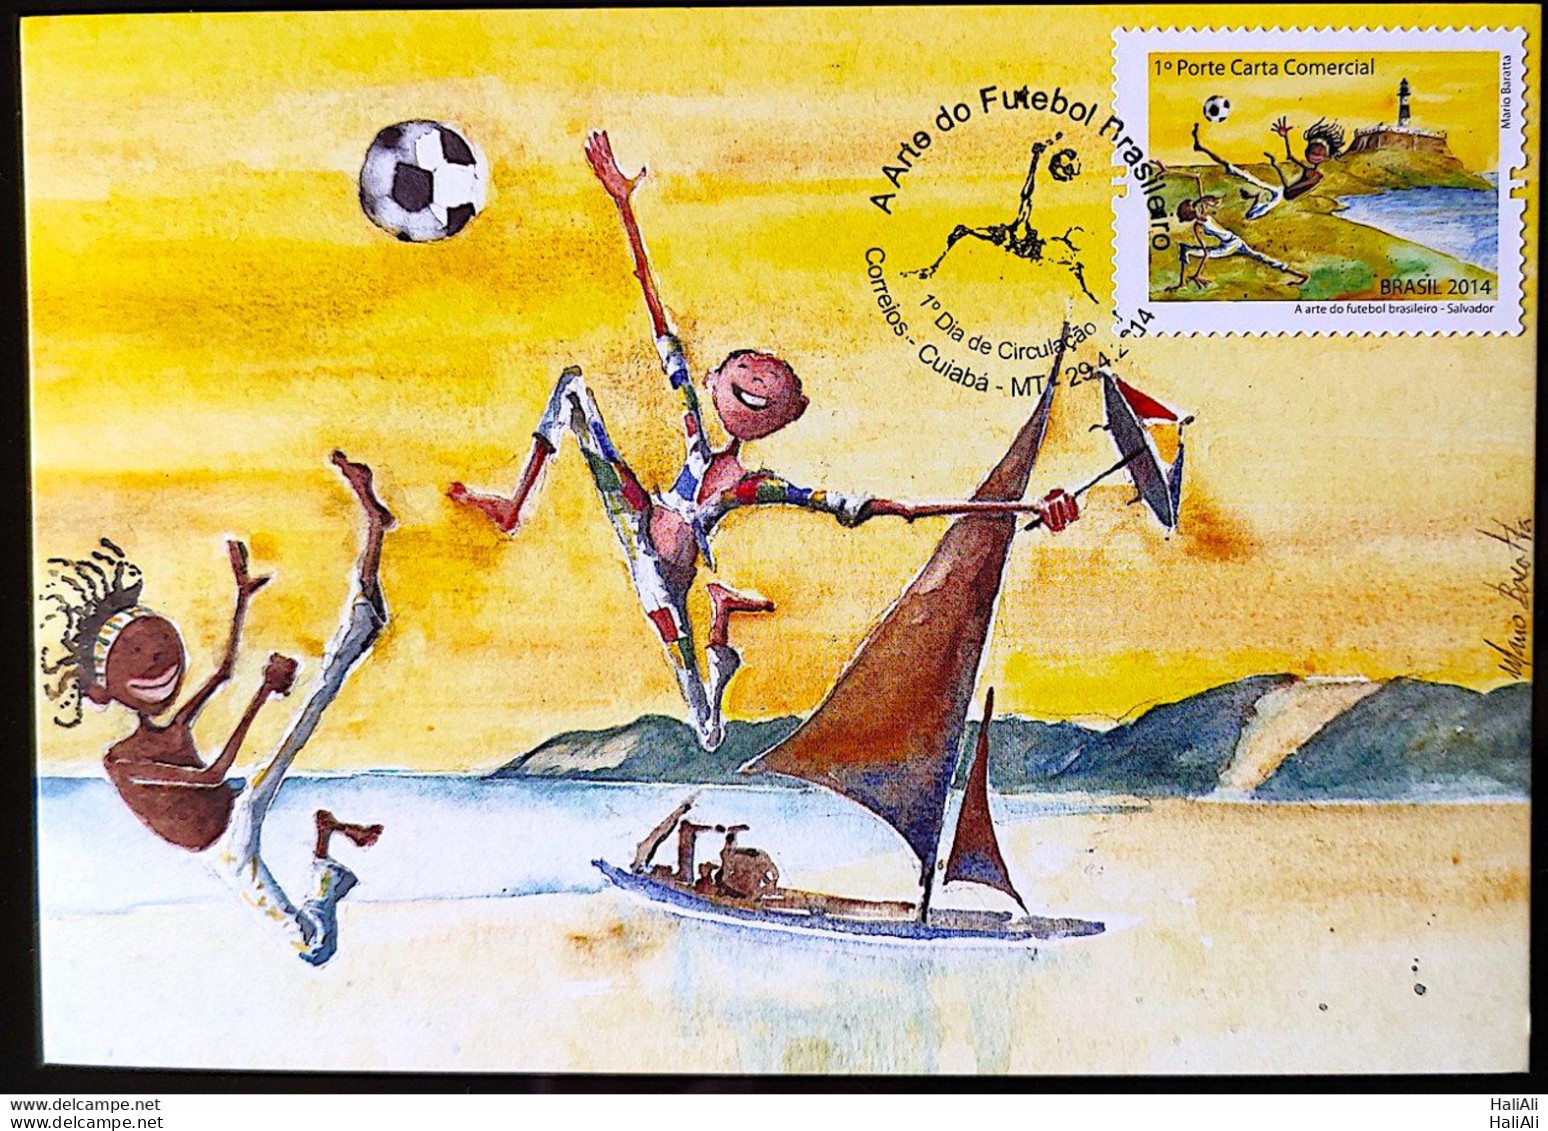 Brazil Maximo Postcard 290A World Cup Art of Footaball CBC MT